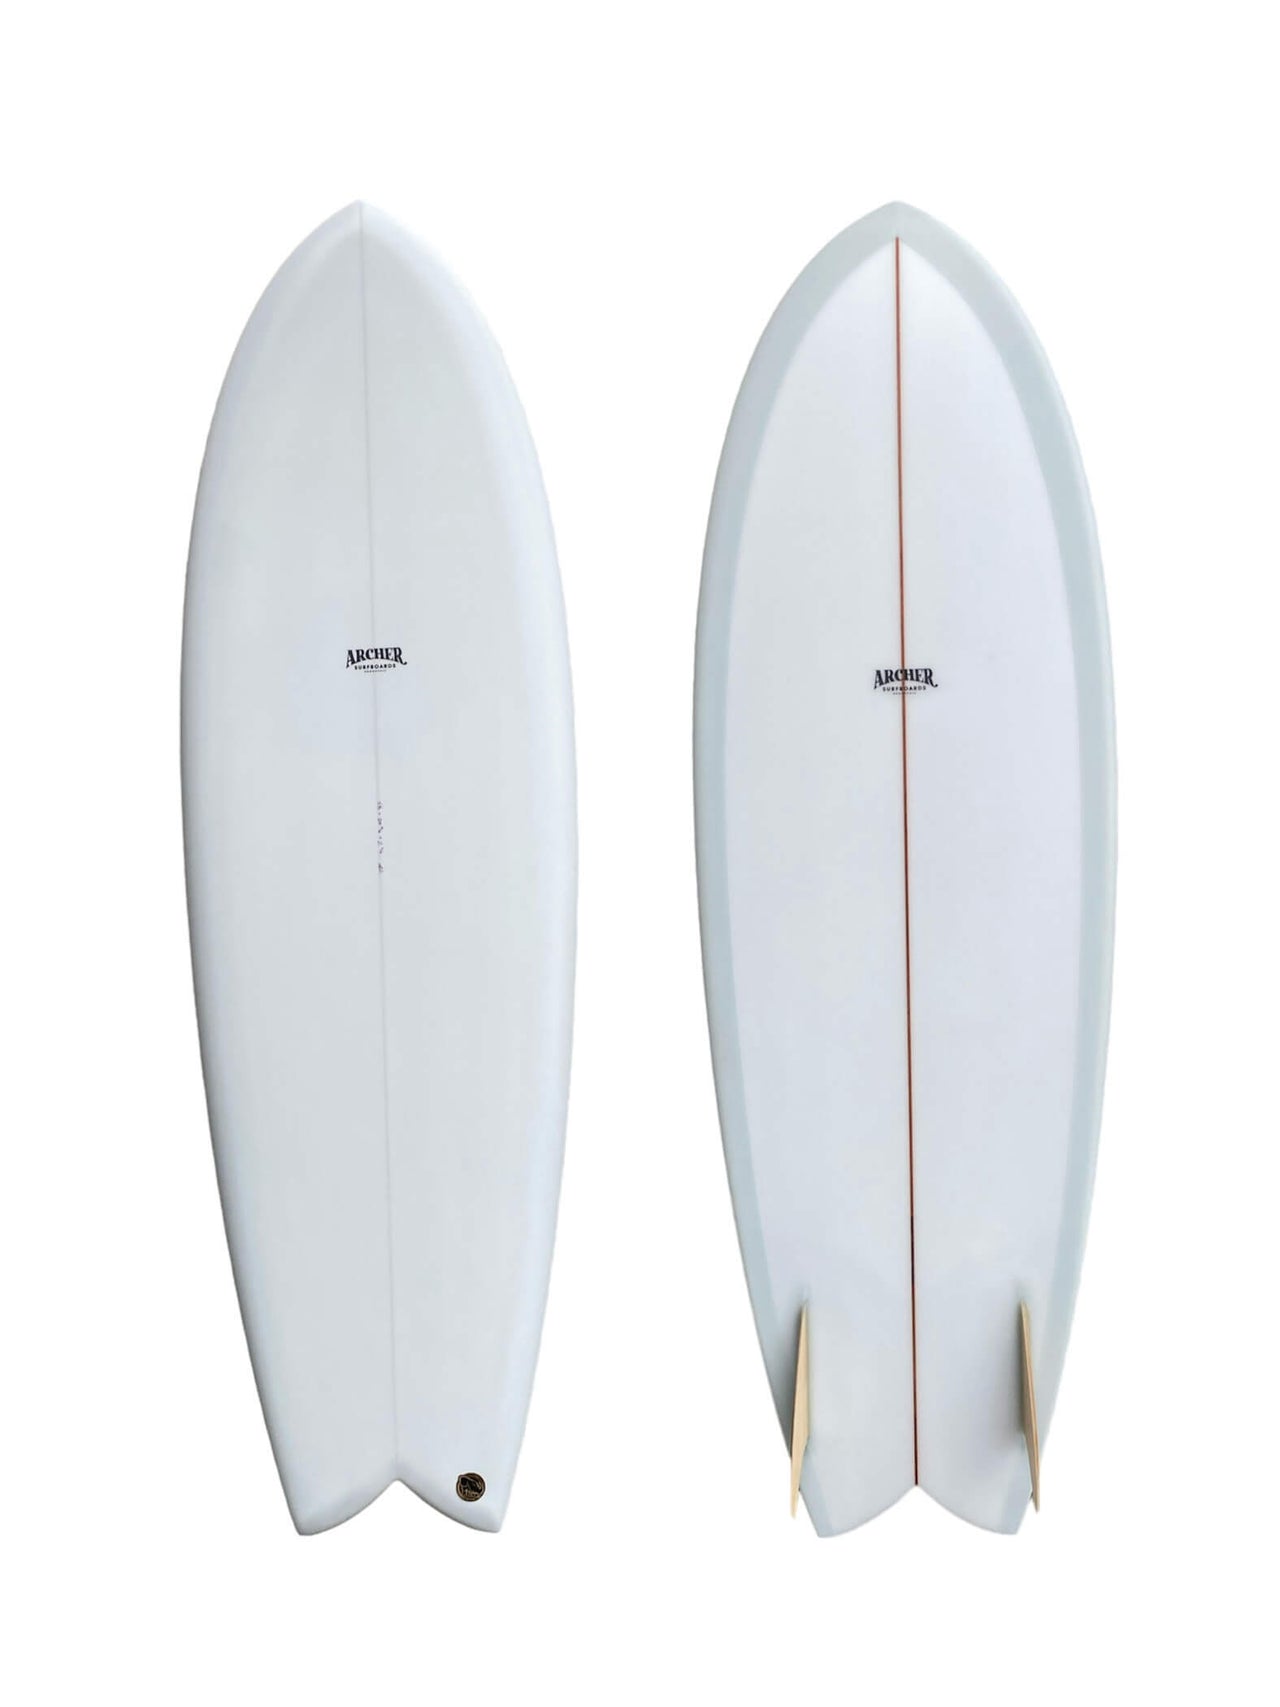 Shop Womens Pants Online  McTavish Byron Bay – McTavish Surfboards